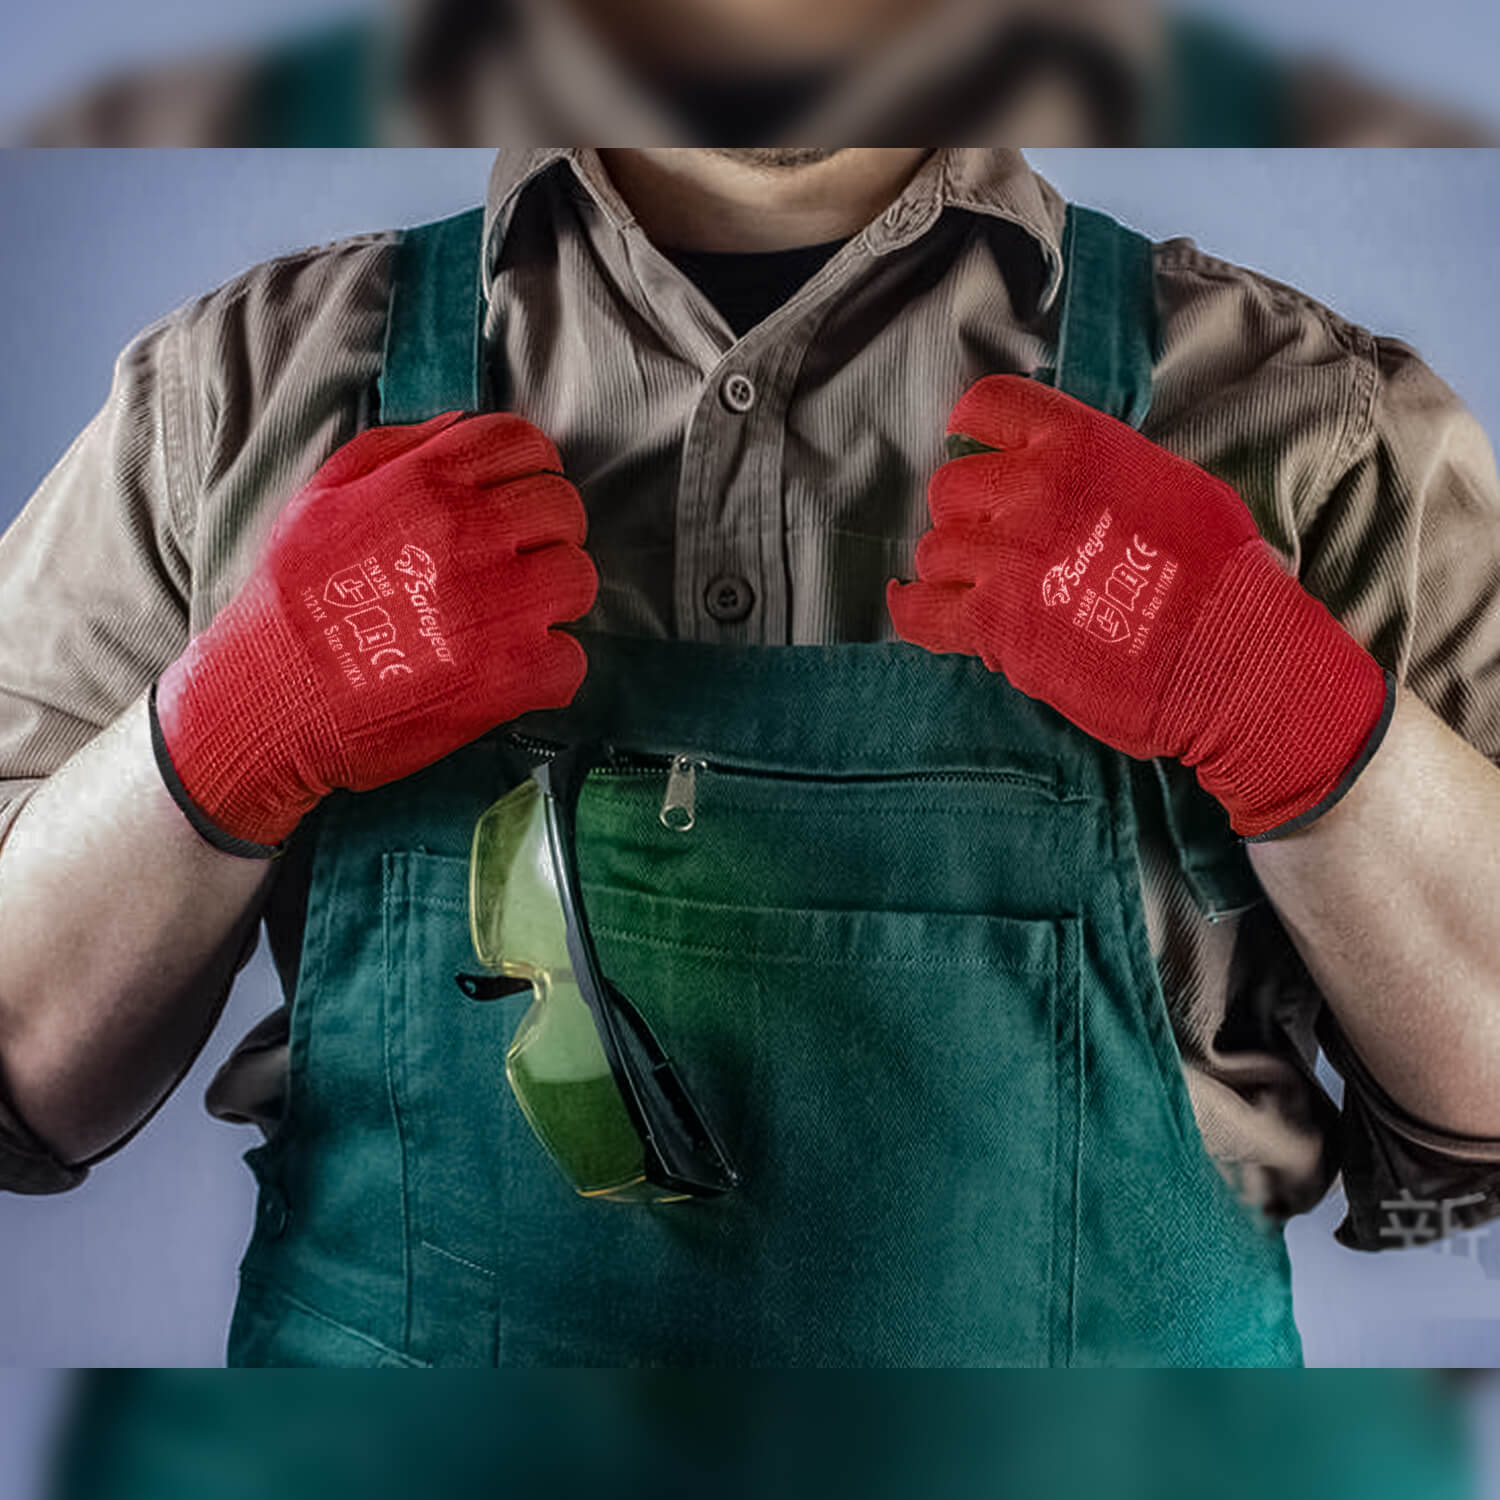 SAFEYEAR 12 Pairs Safety Gloves PU Coated Work Gloves for General Duty Work Gardening